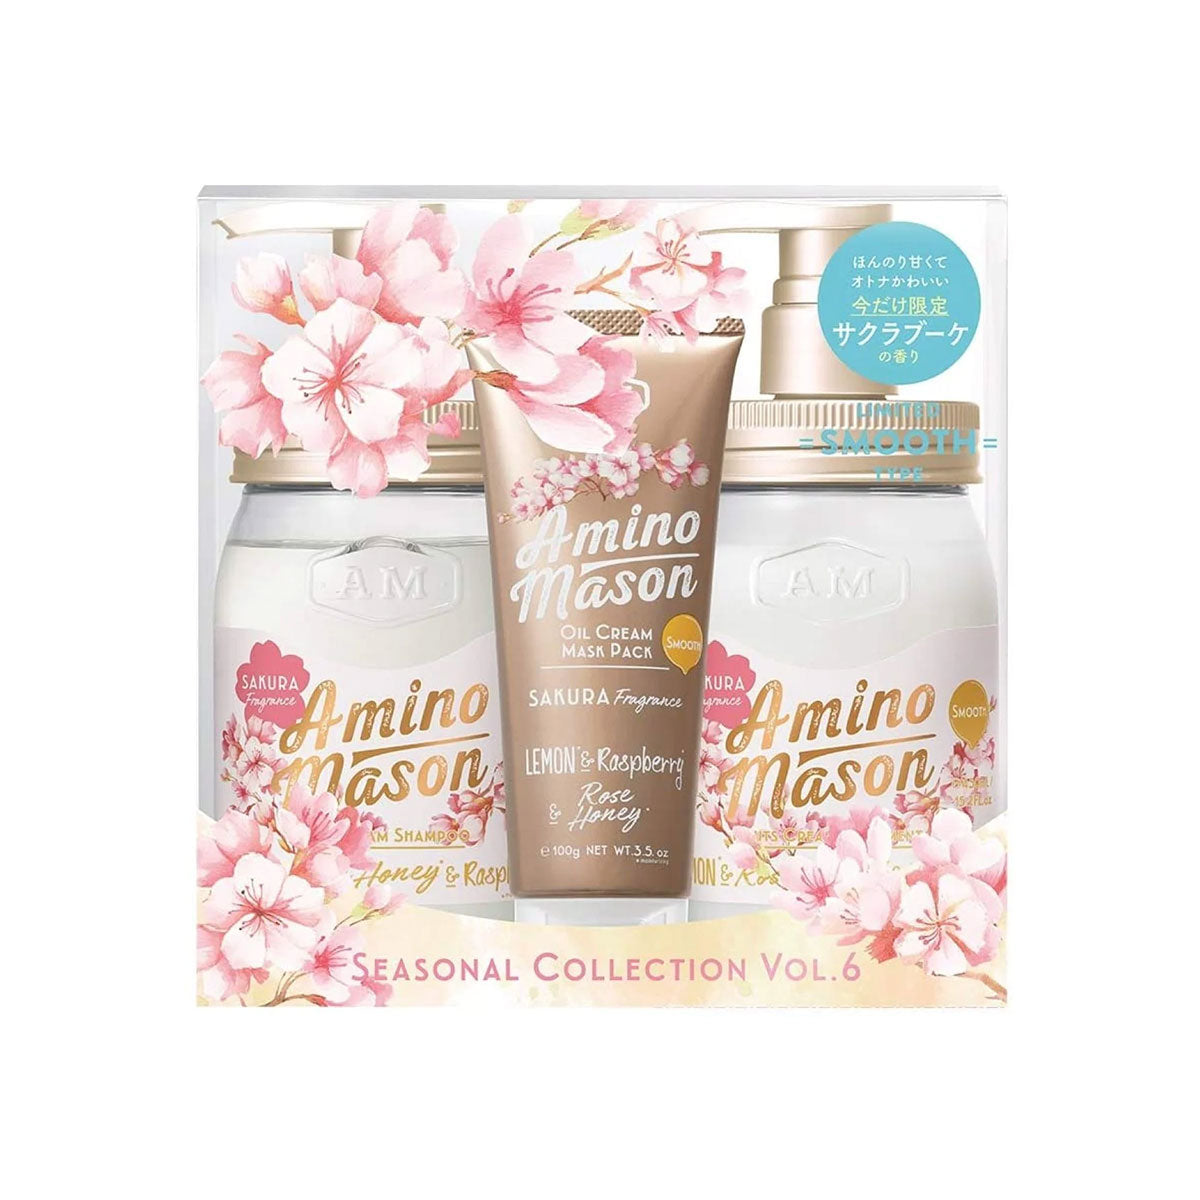 Smooth Seasonal Shampoo Collection 3pcs #Sakura  450ml+450ml+100g